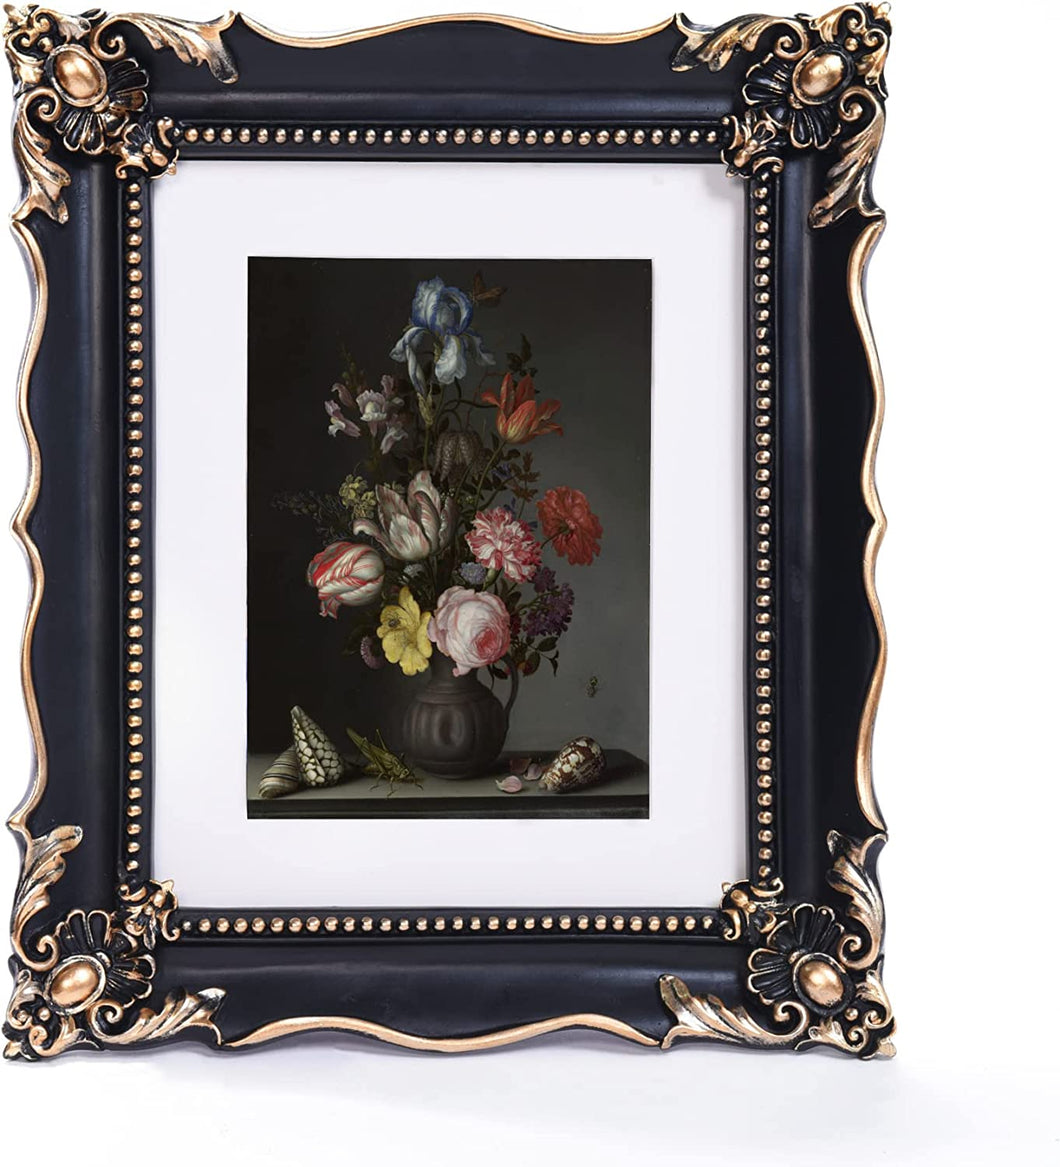 8x10 Vintage Picture Frame with Embossed Flower Design - EK CHIC HOME